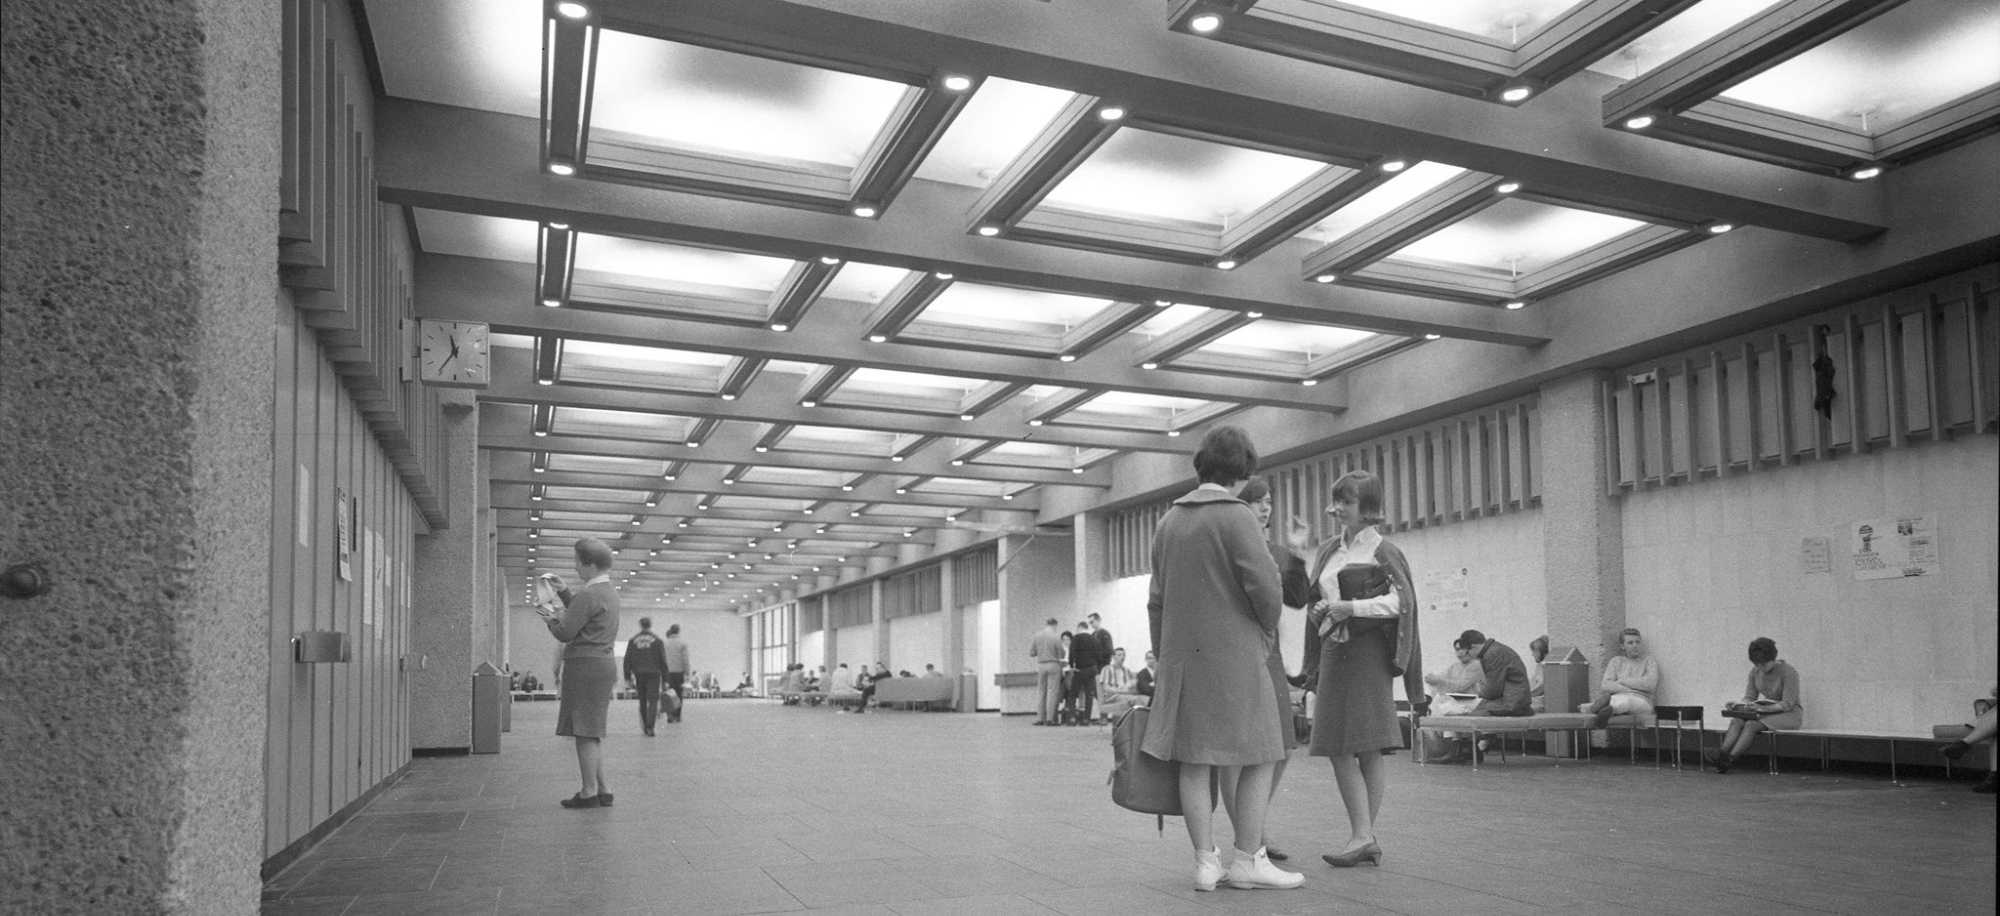 SFU AQ hallway in 1965